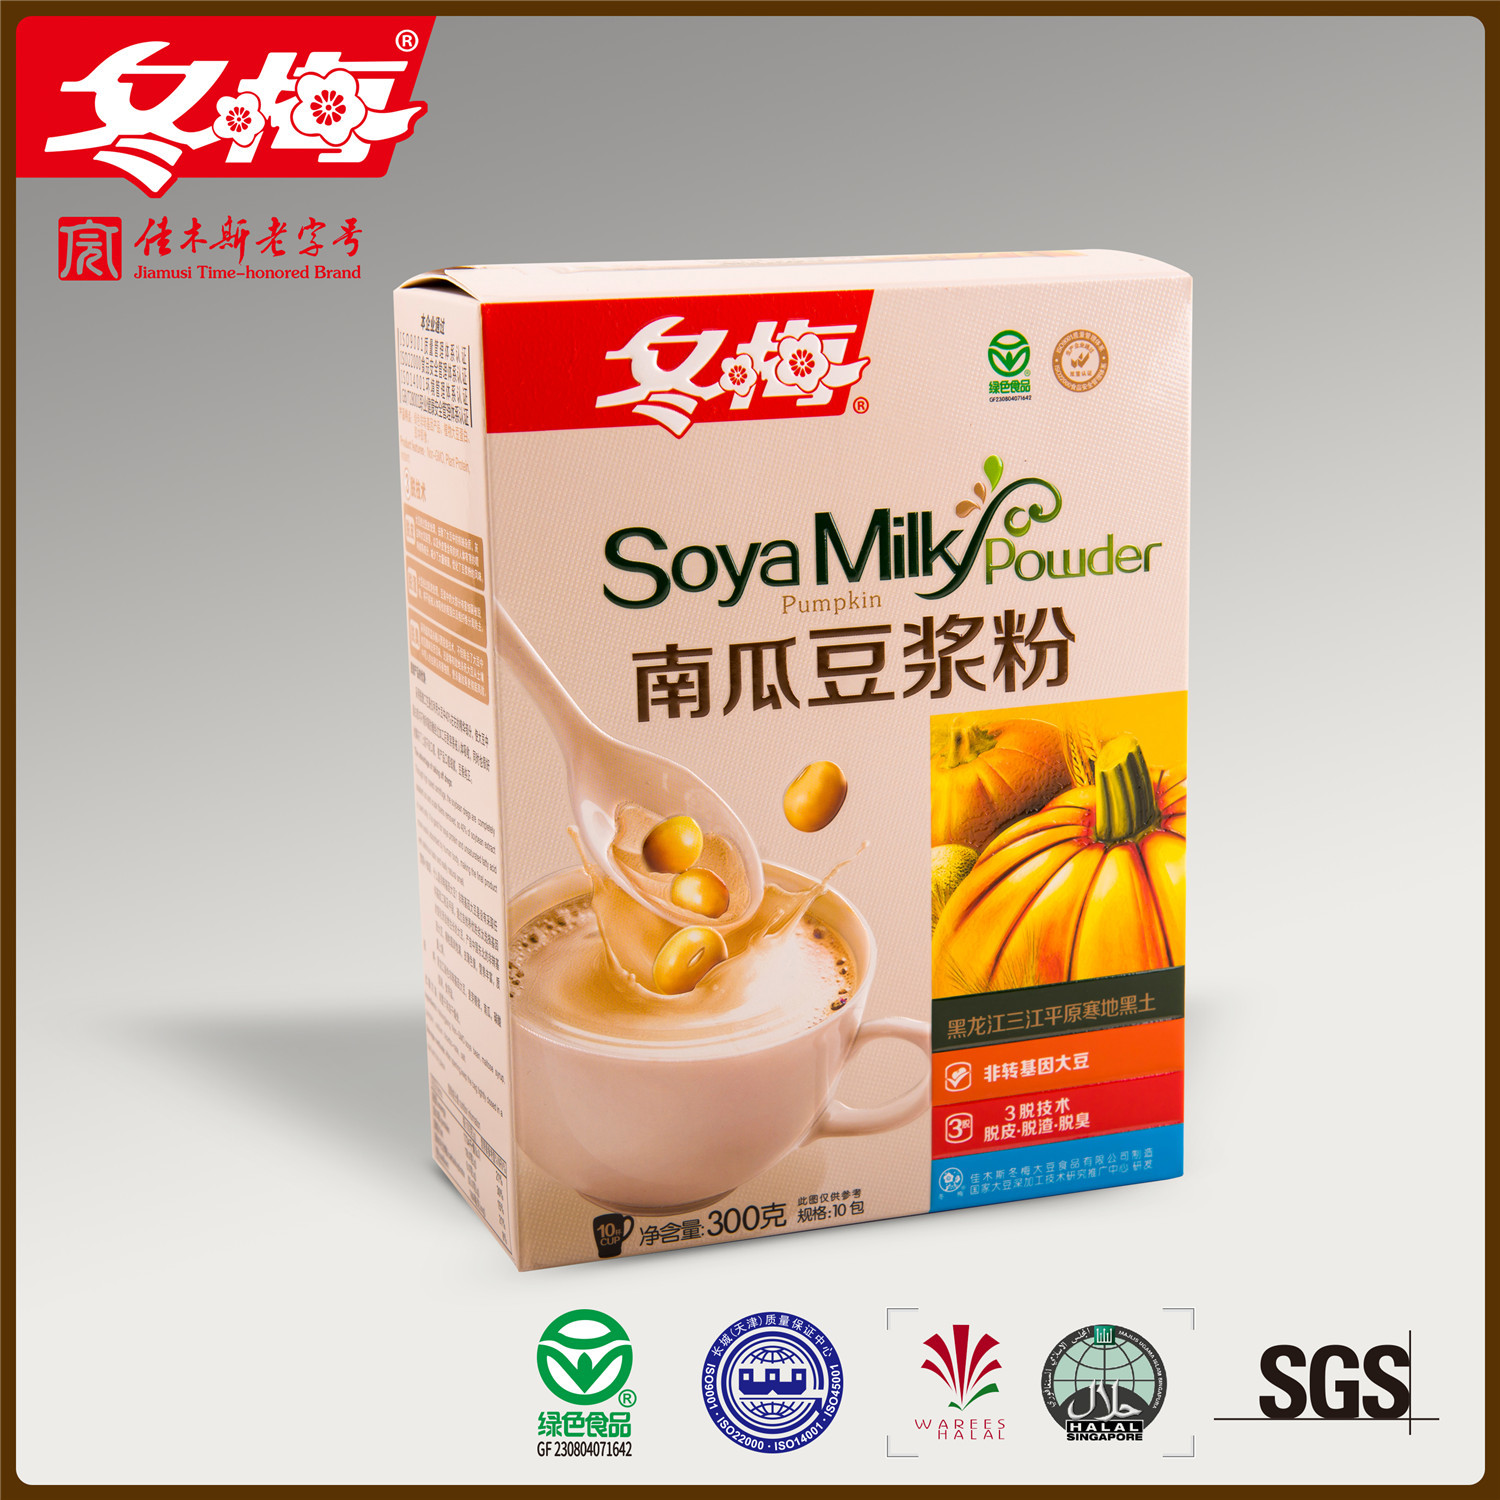 Pumpkin soy milk powder small box